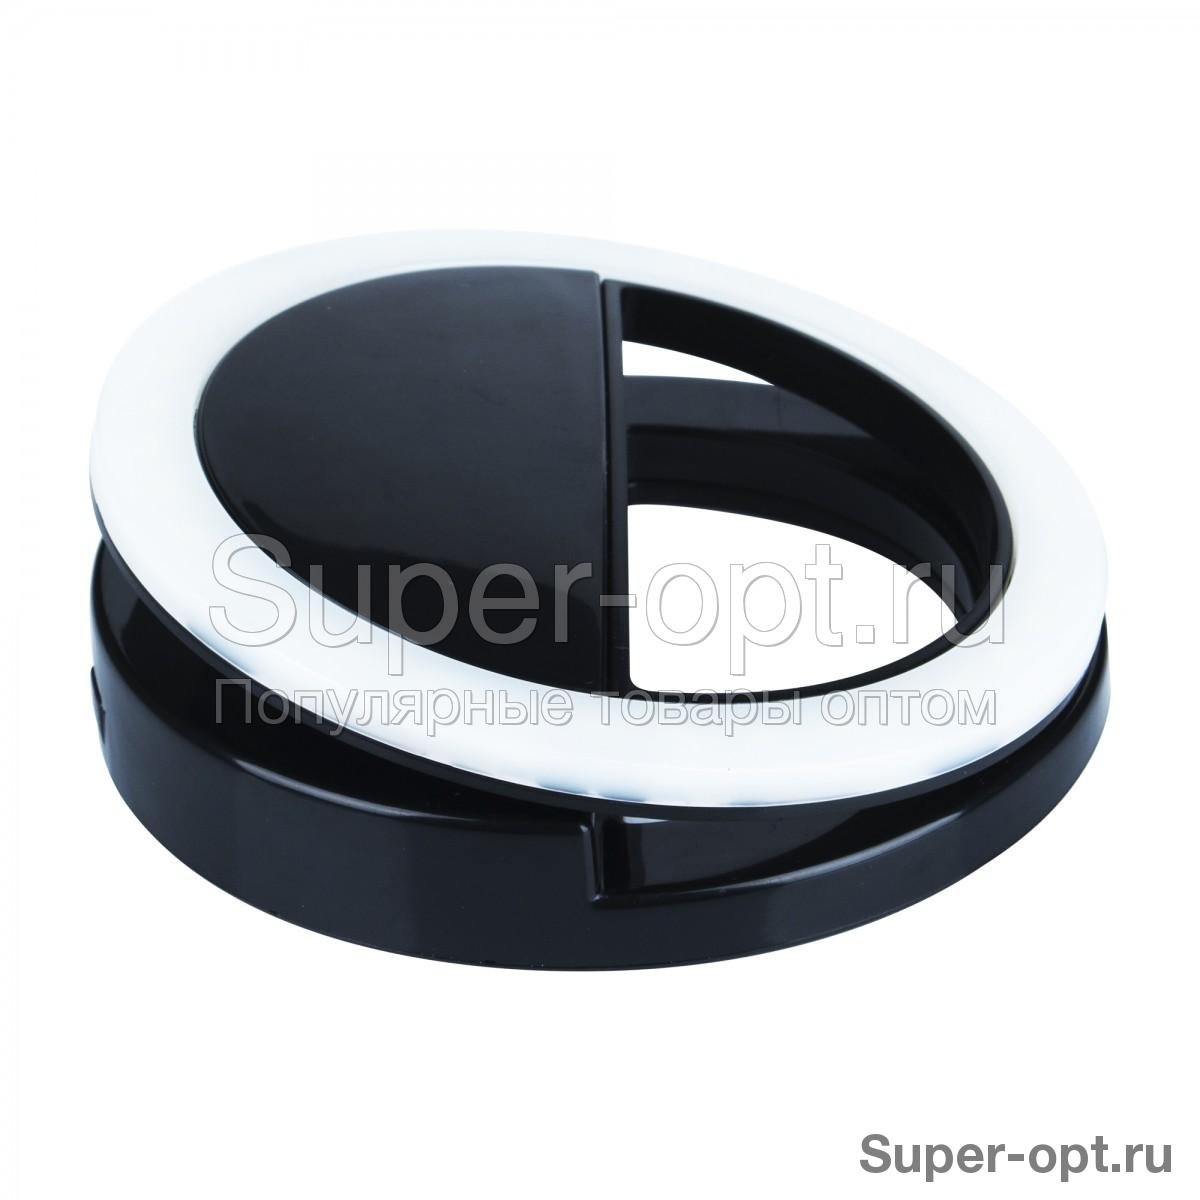 Светодиодное кольцо для селфи Selfie Ring Light на батарейках